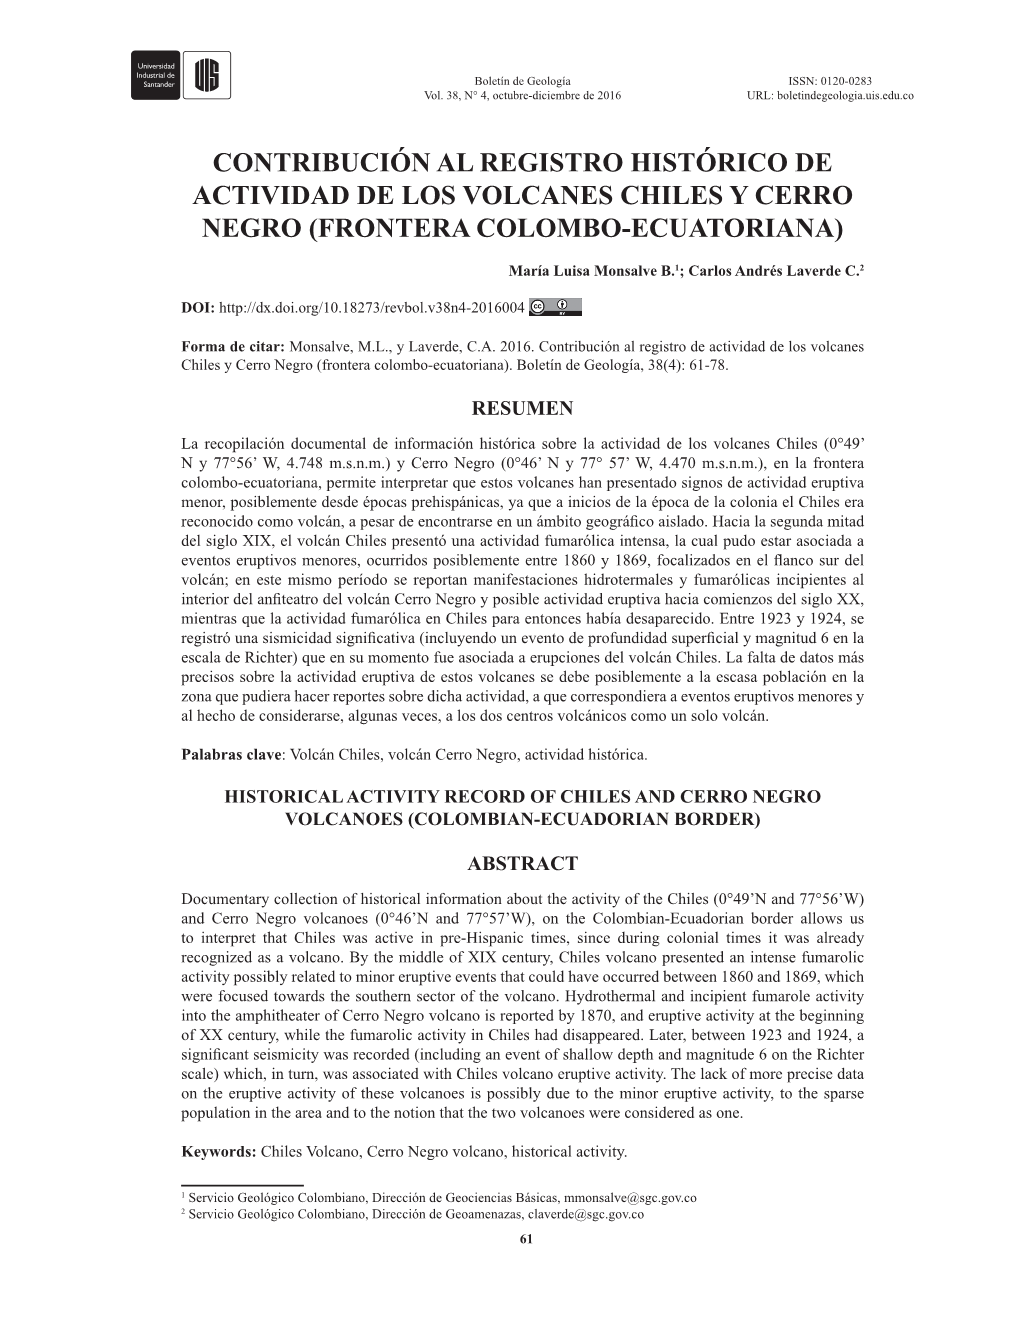 Historical Activity Record of Chiles and Cerro Negro Volcanoes (Colombian-Ecuadorian Border)